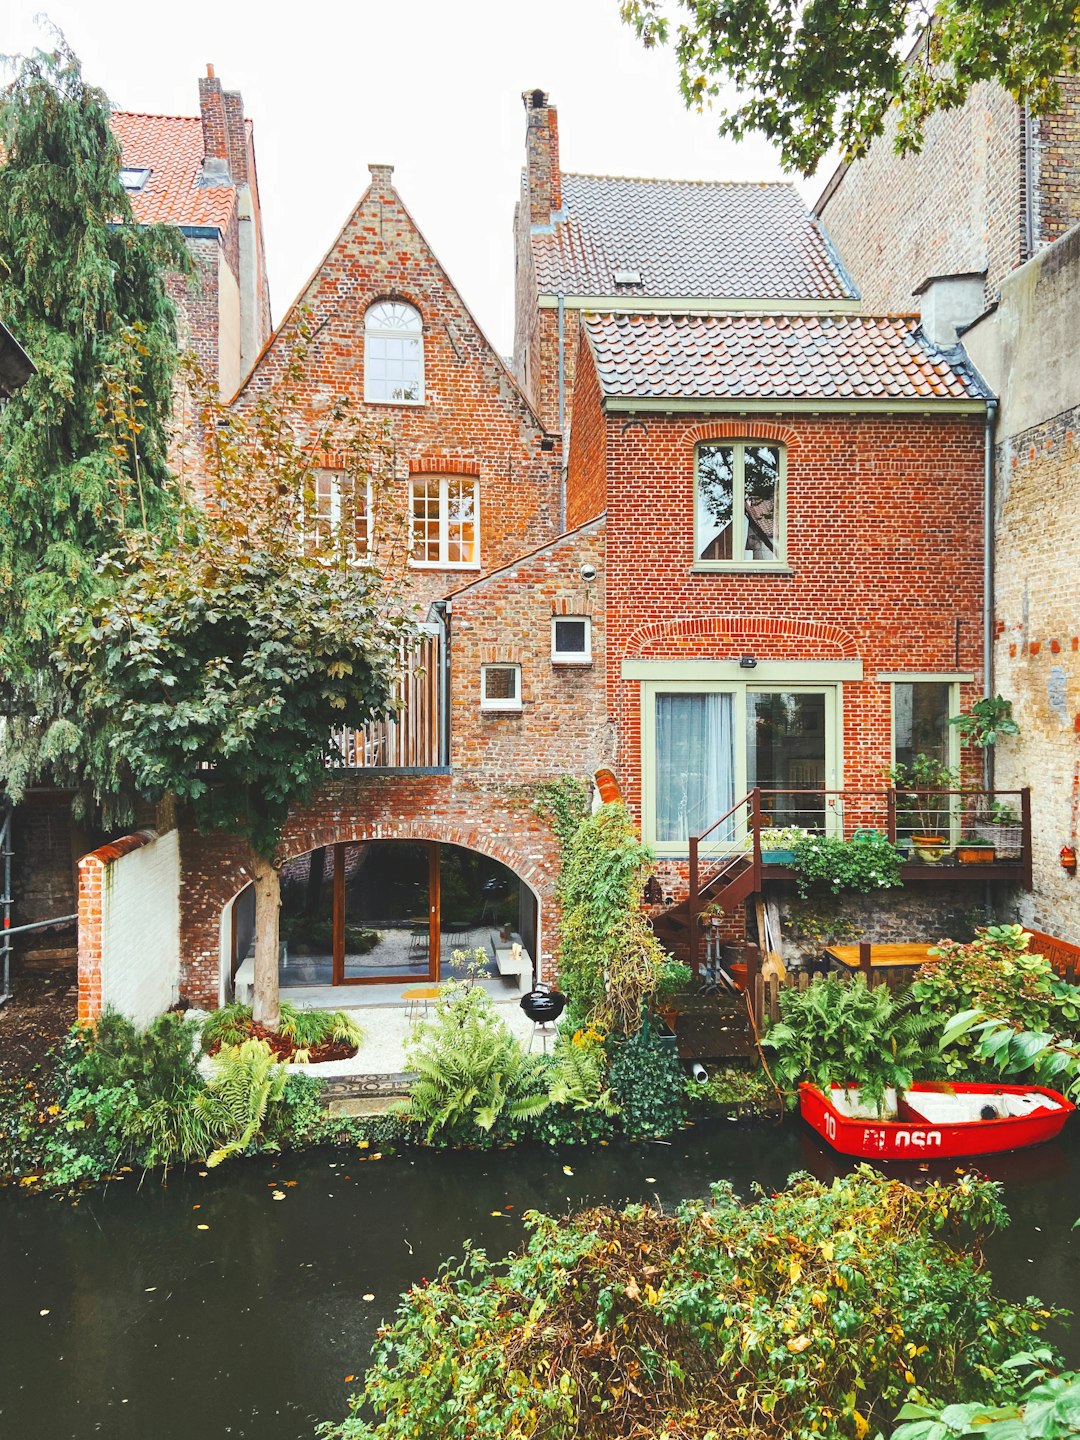 Waterway photo spot Bruges Brussels